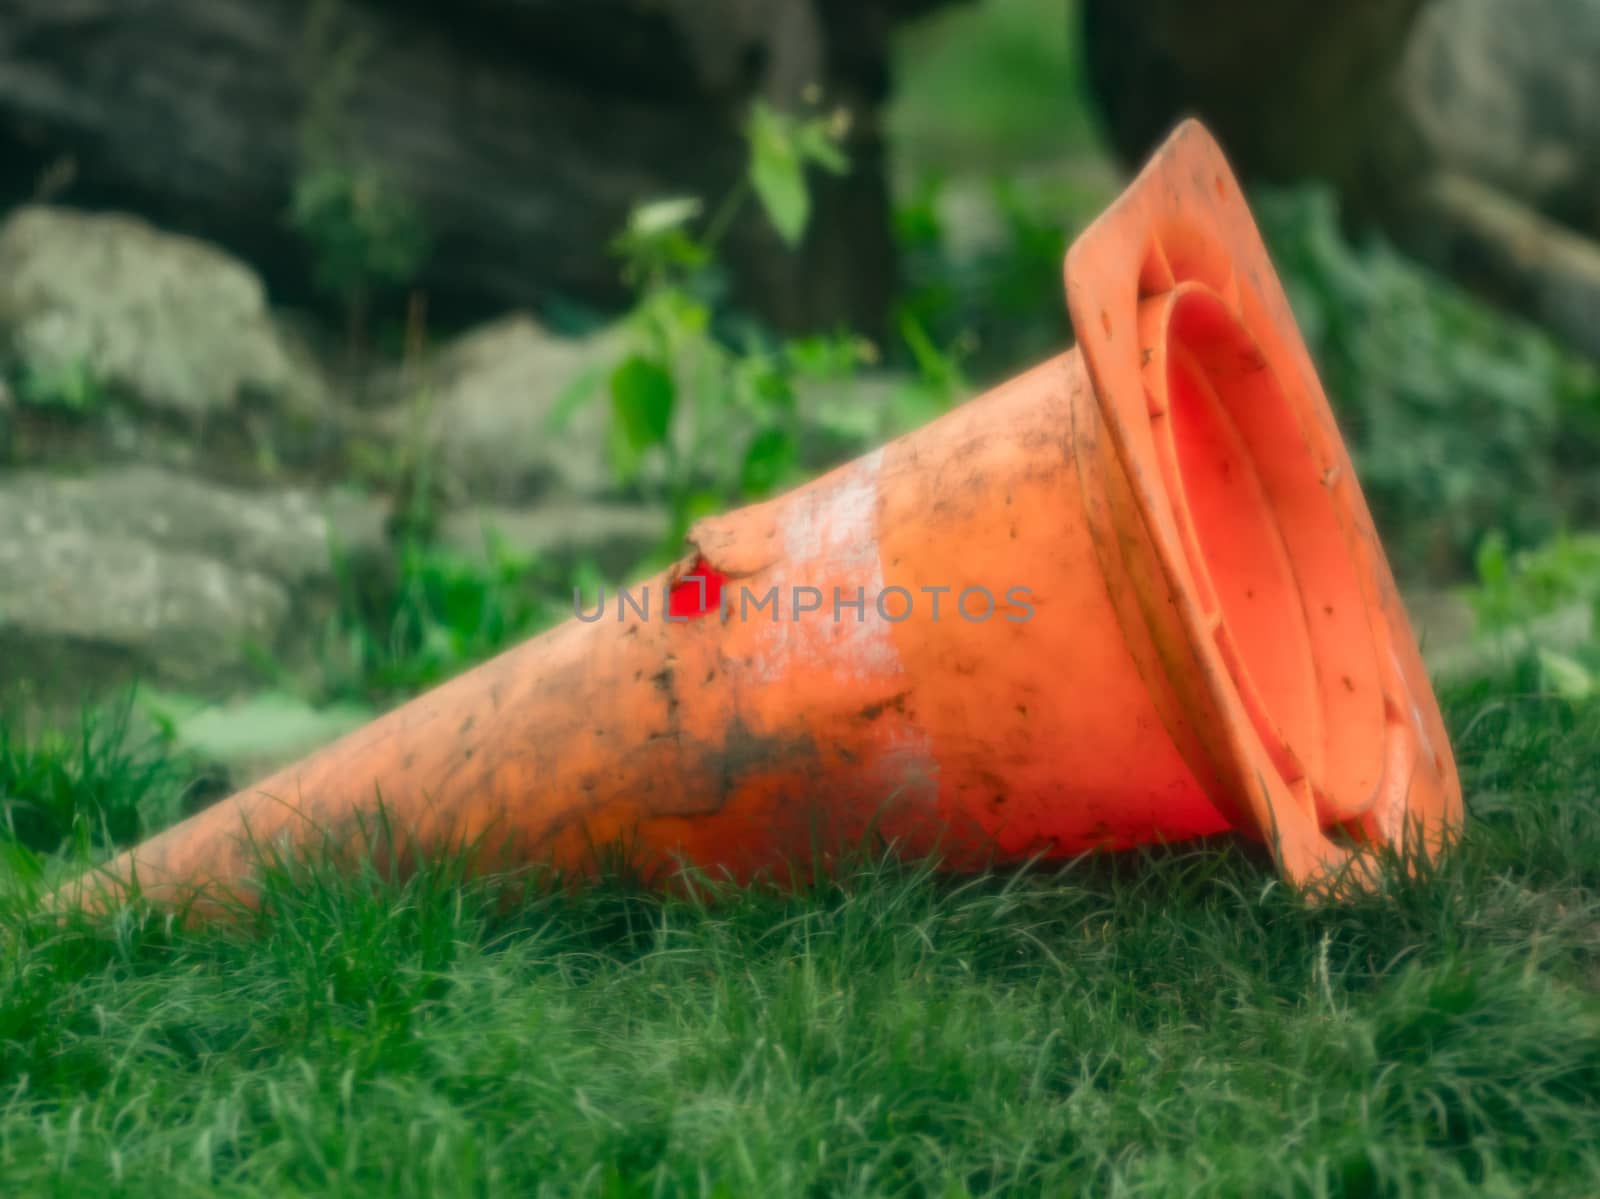 An orange traffic cone in the grass